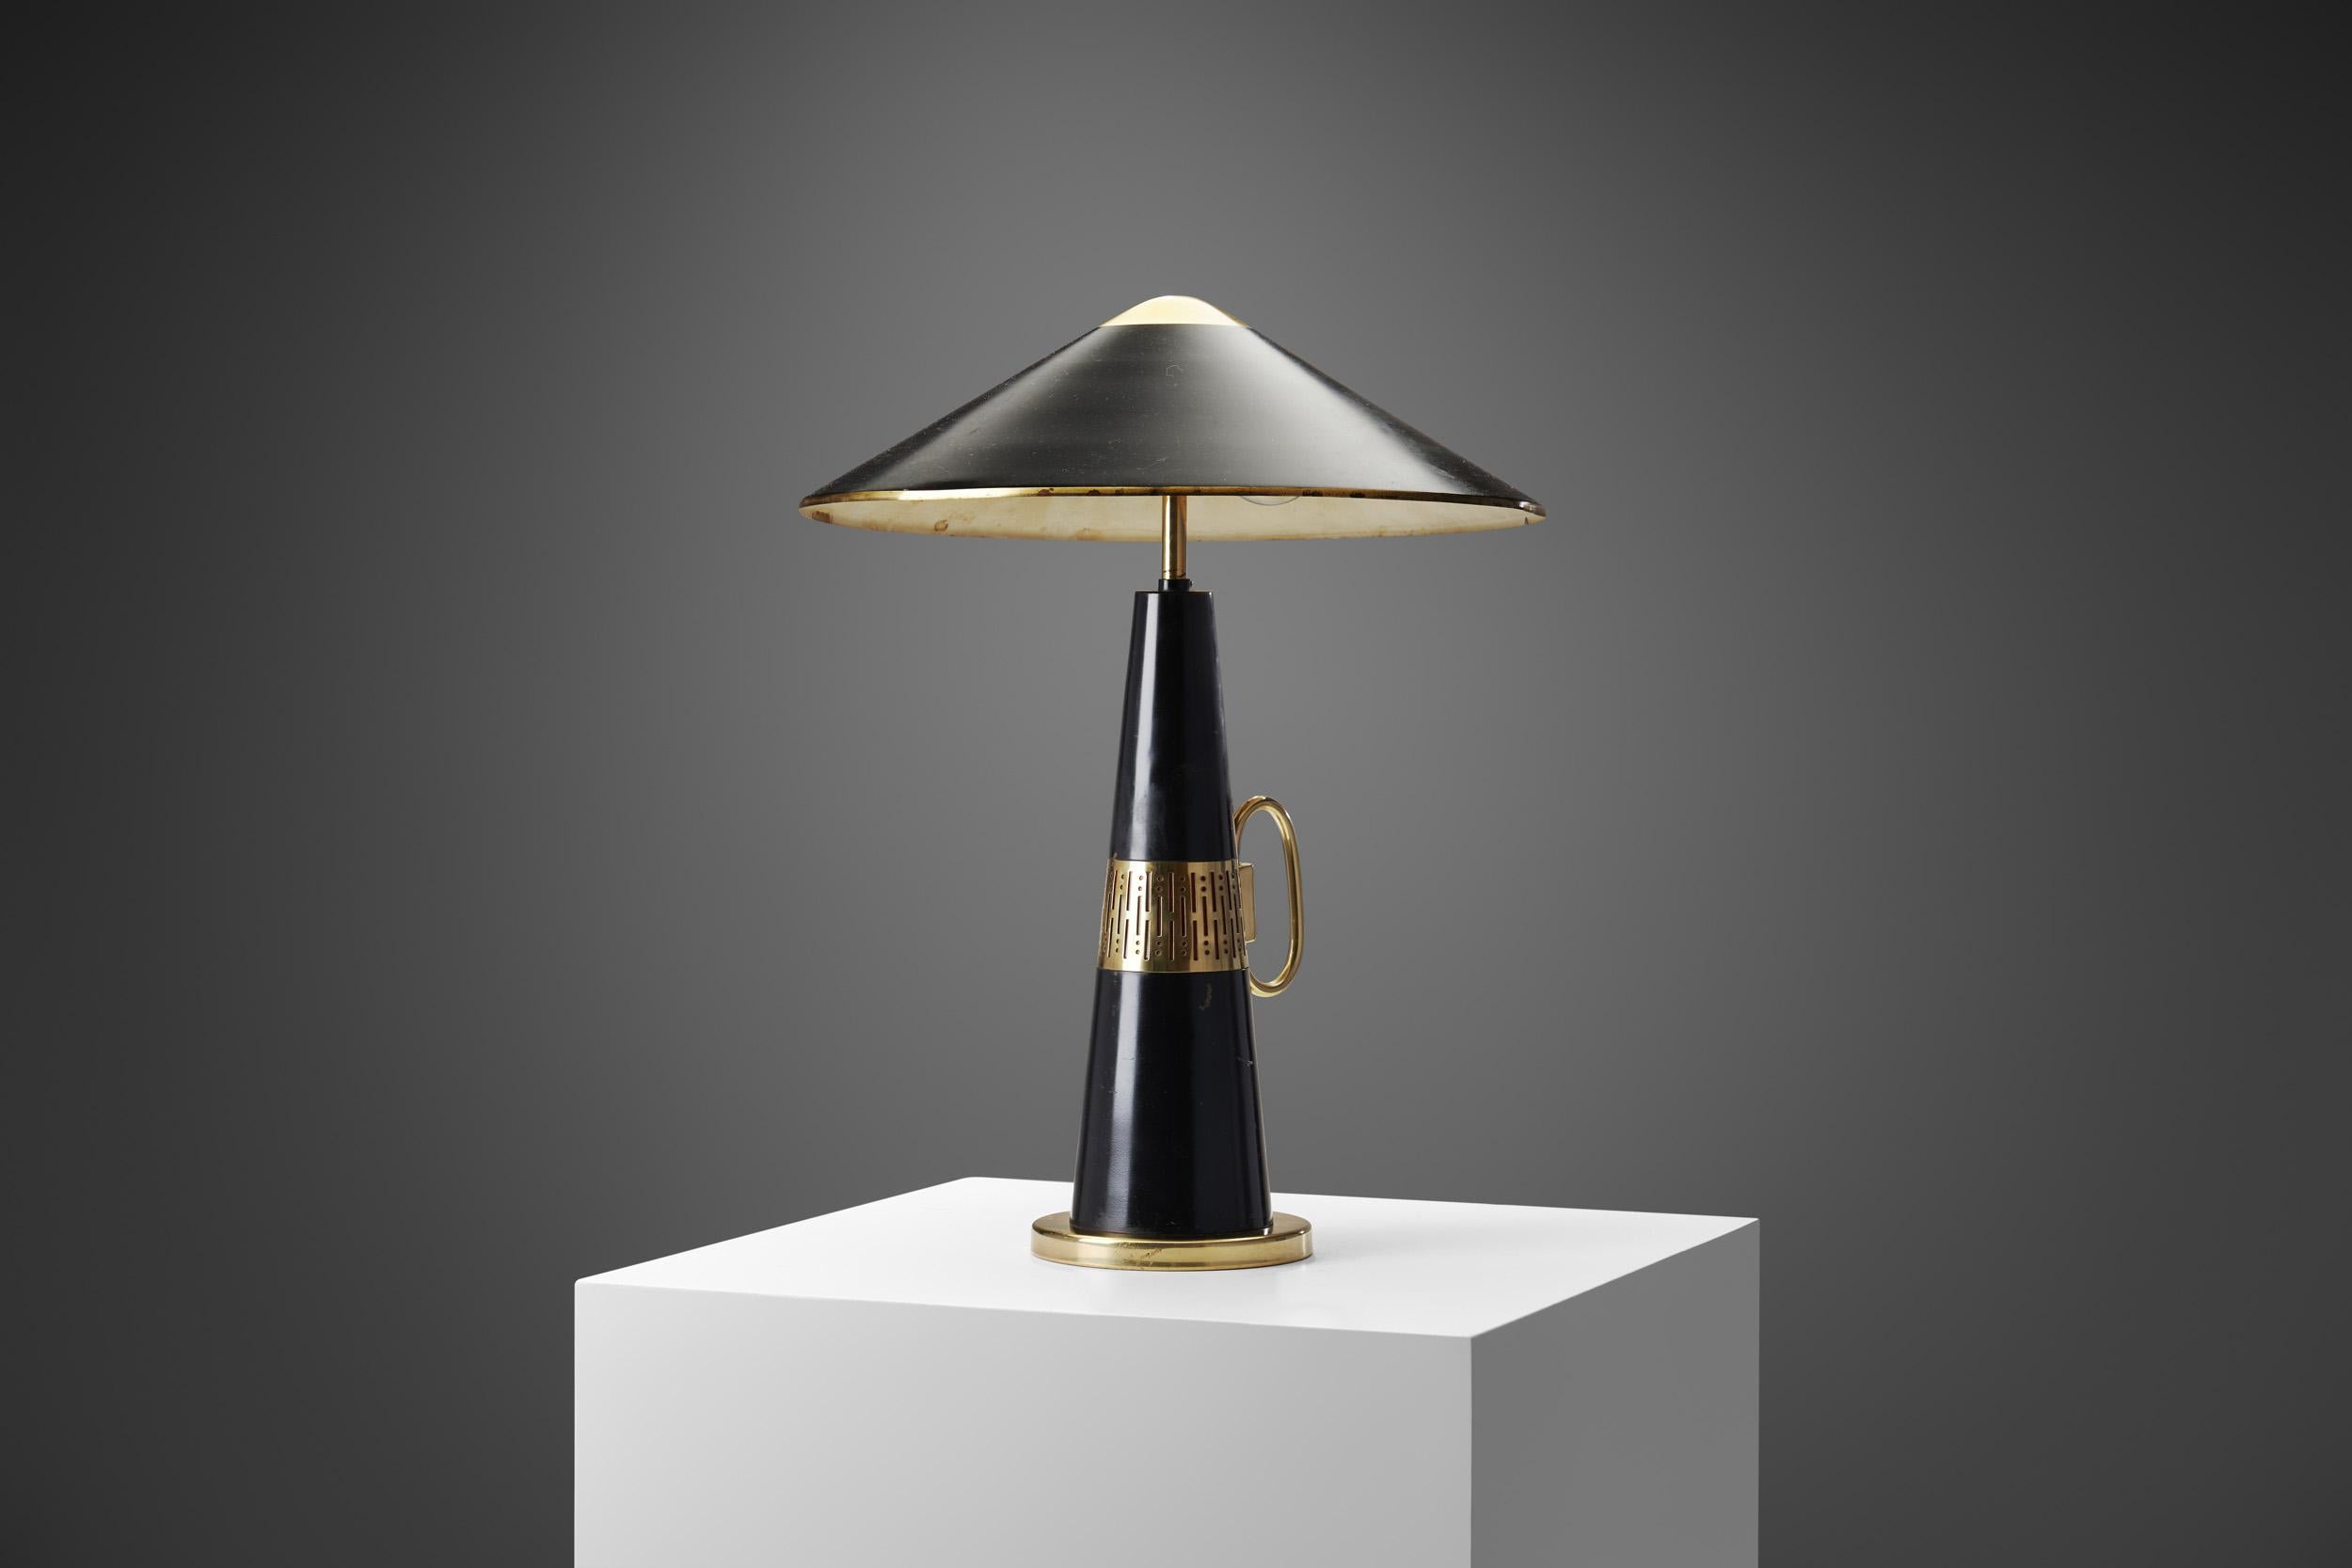 Svend Aage Holm Sørensen 'Attributed' Modell 8208 Lampe, Schweden, 1950er Jahre (Skandinavische Moderne) im Angebot